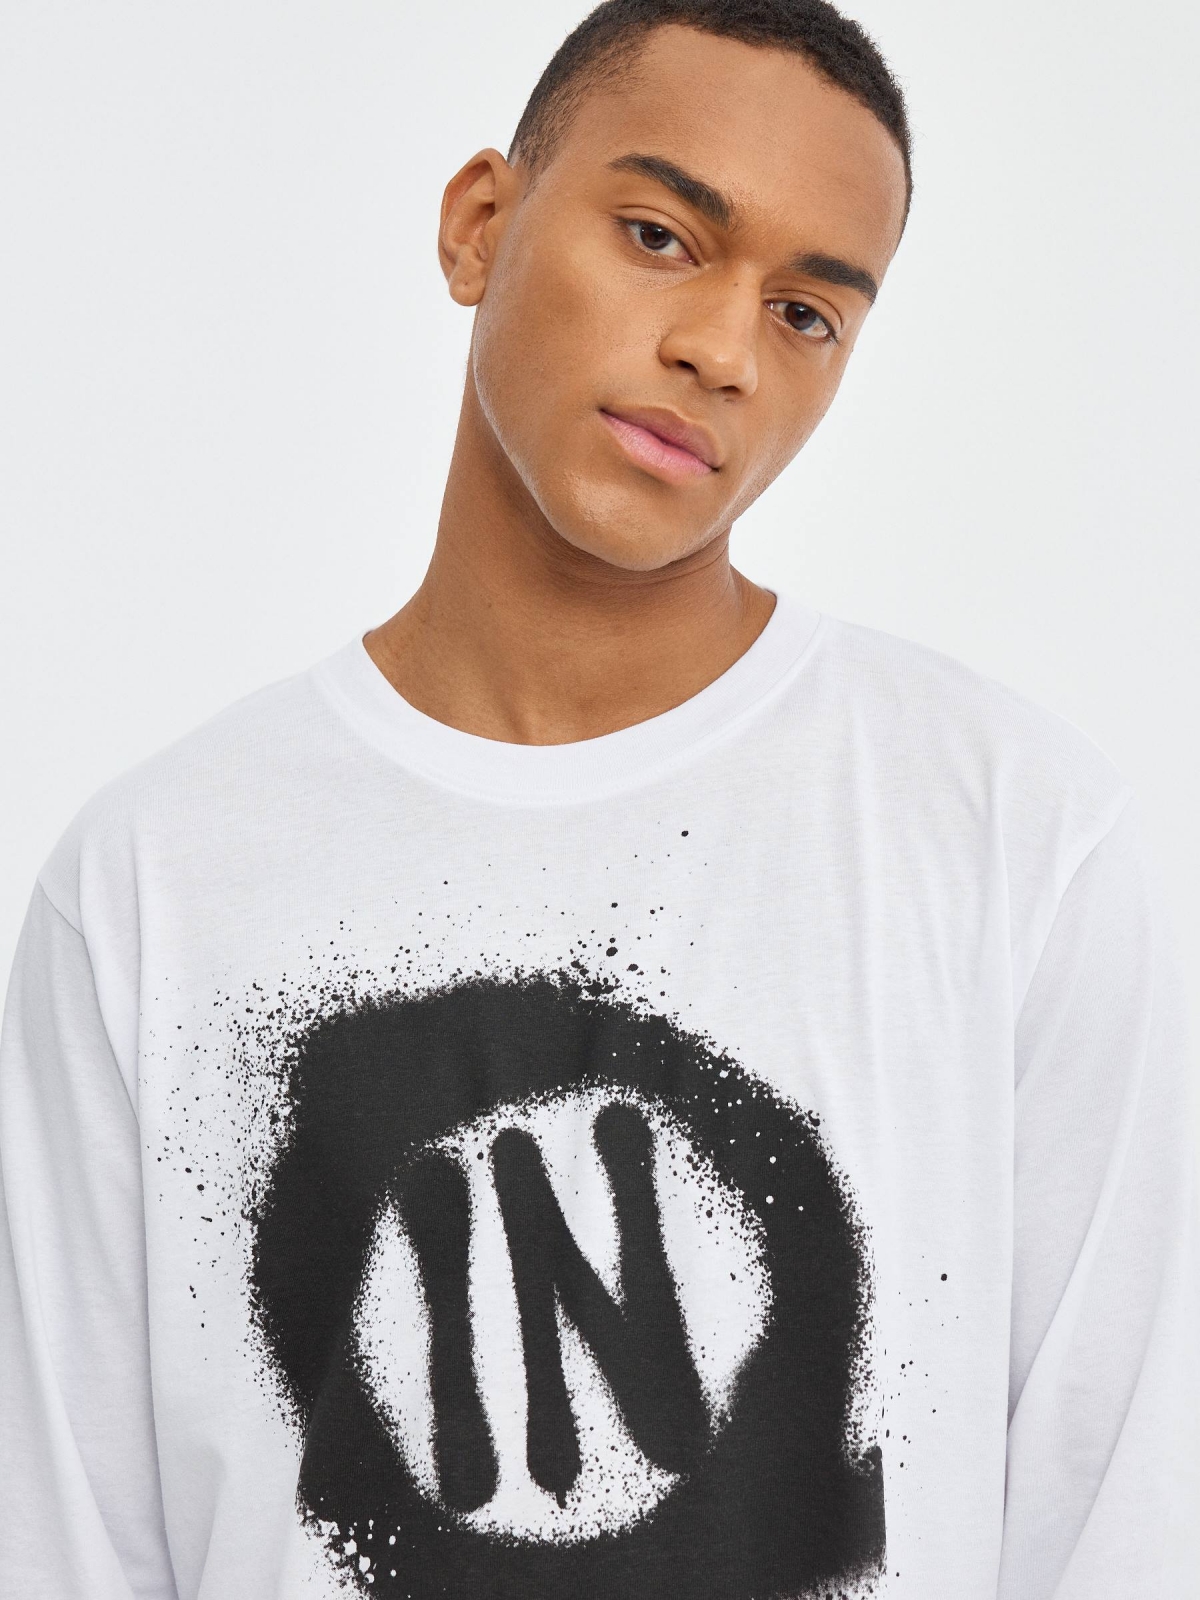 INSIDE graffiti t-shirt | Men's T-Shirts | INSIDE